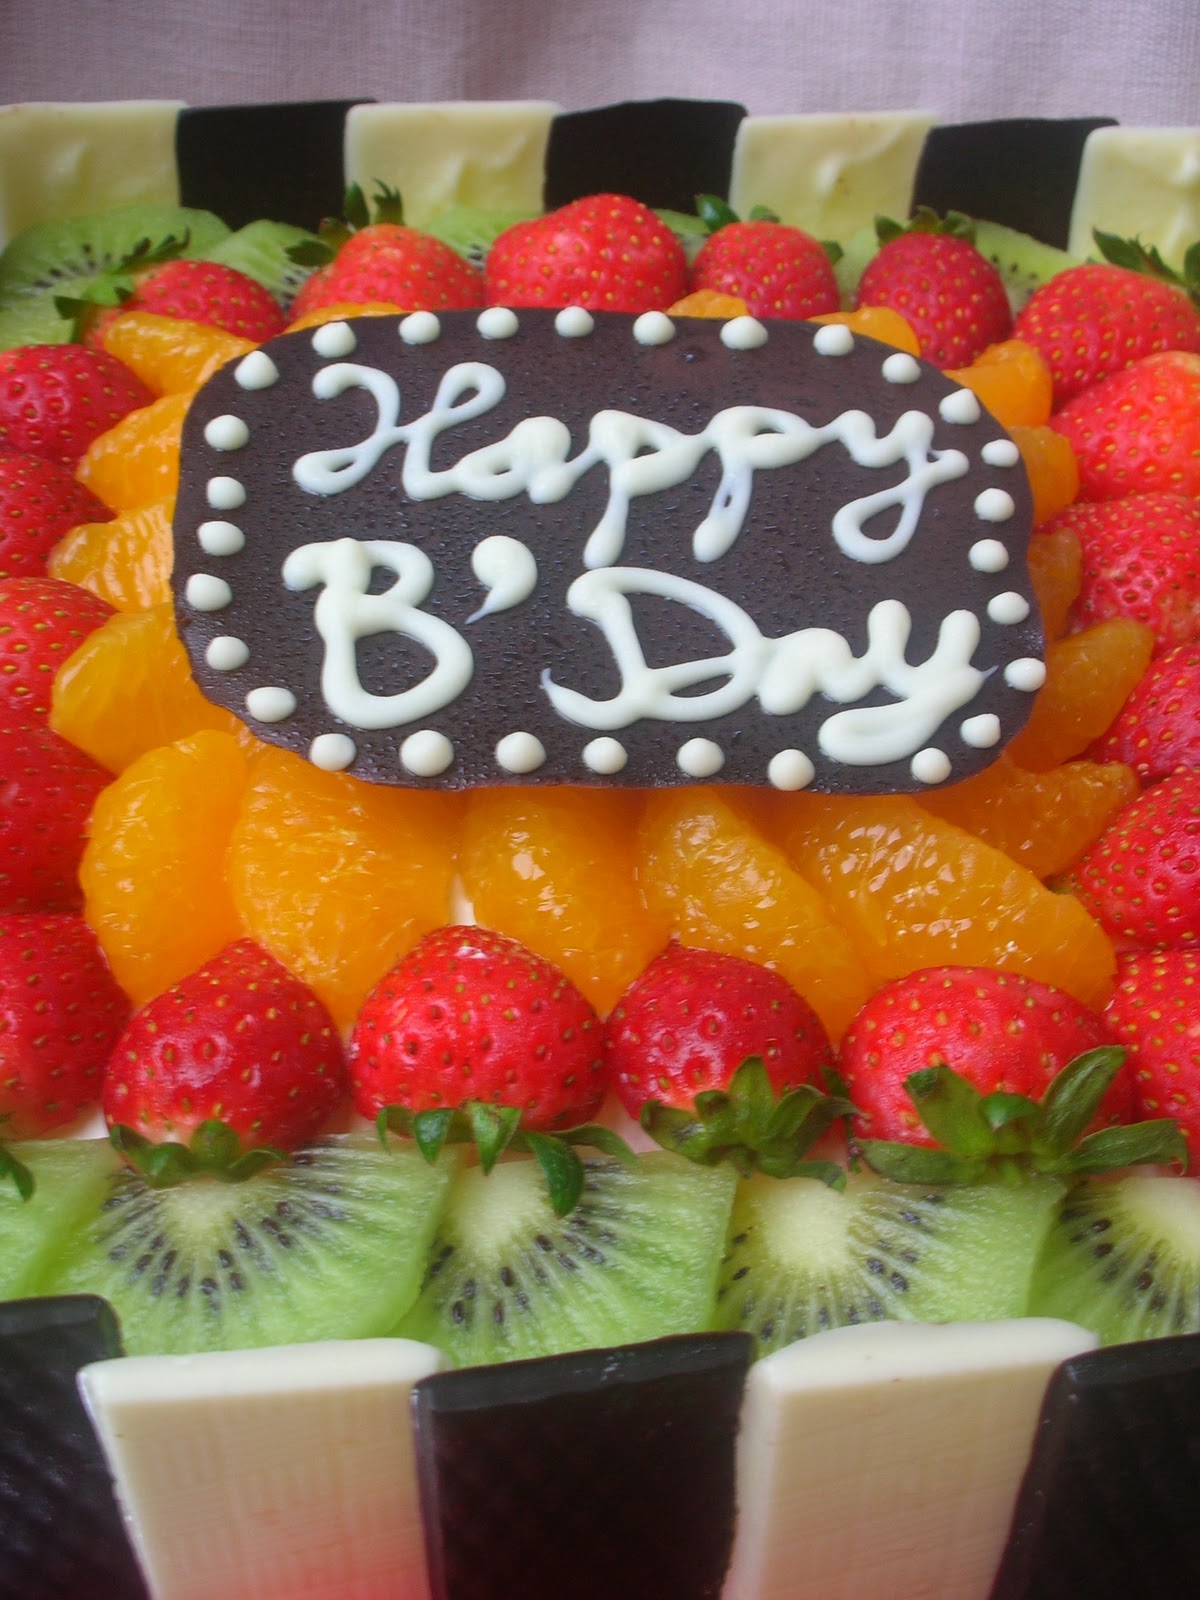 cake birthday husband say ina pm posted melsi